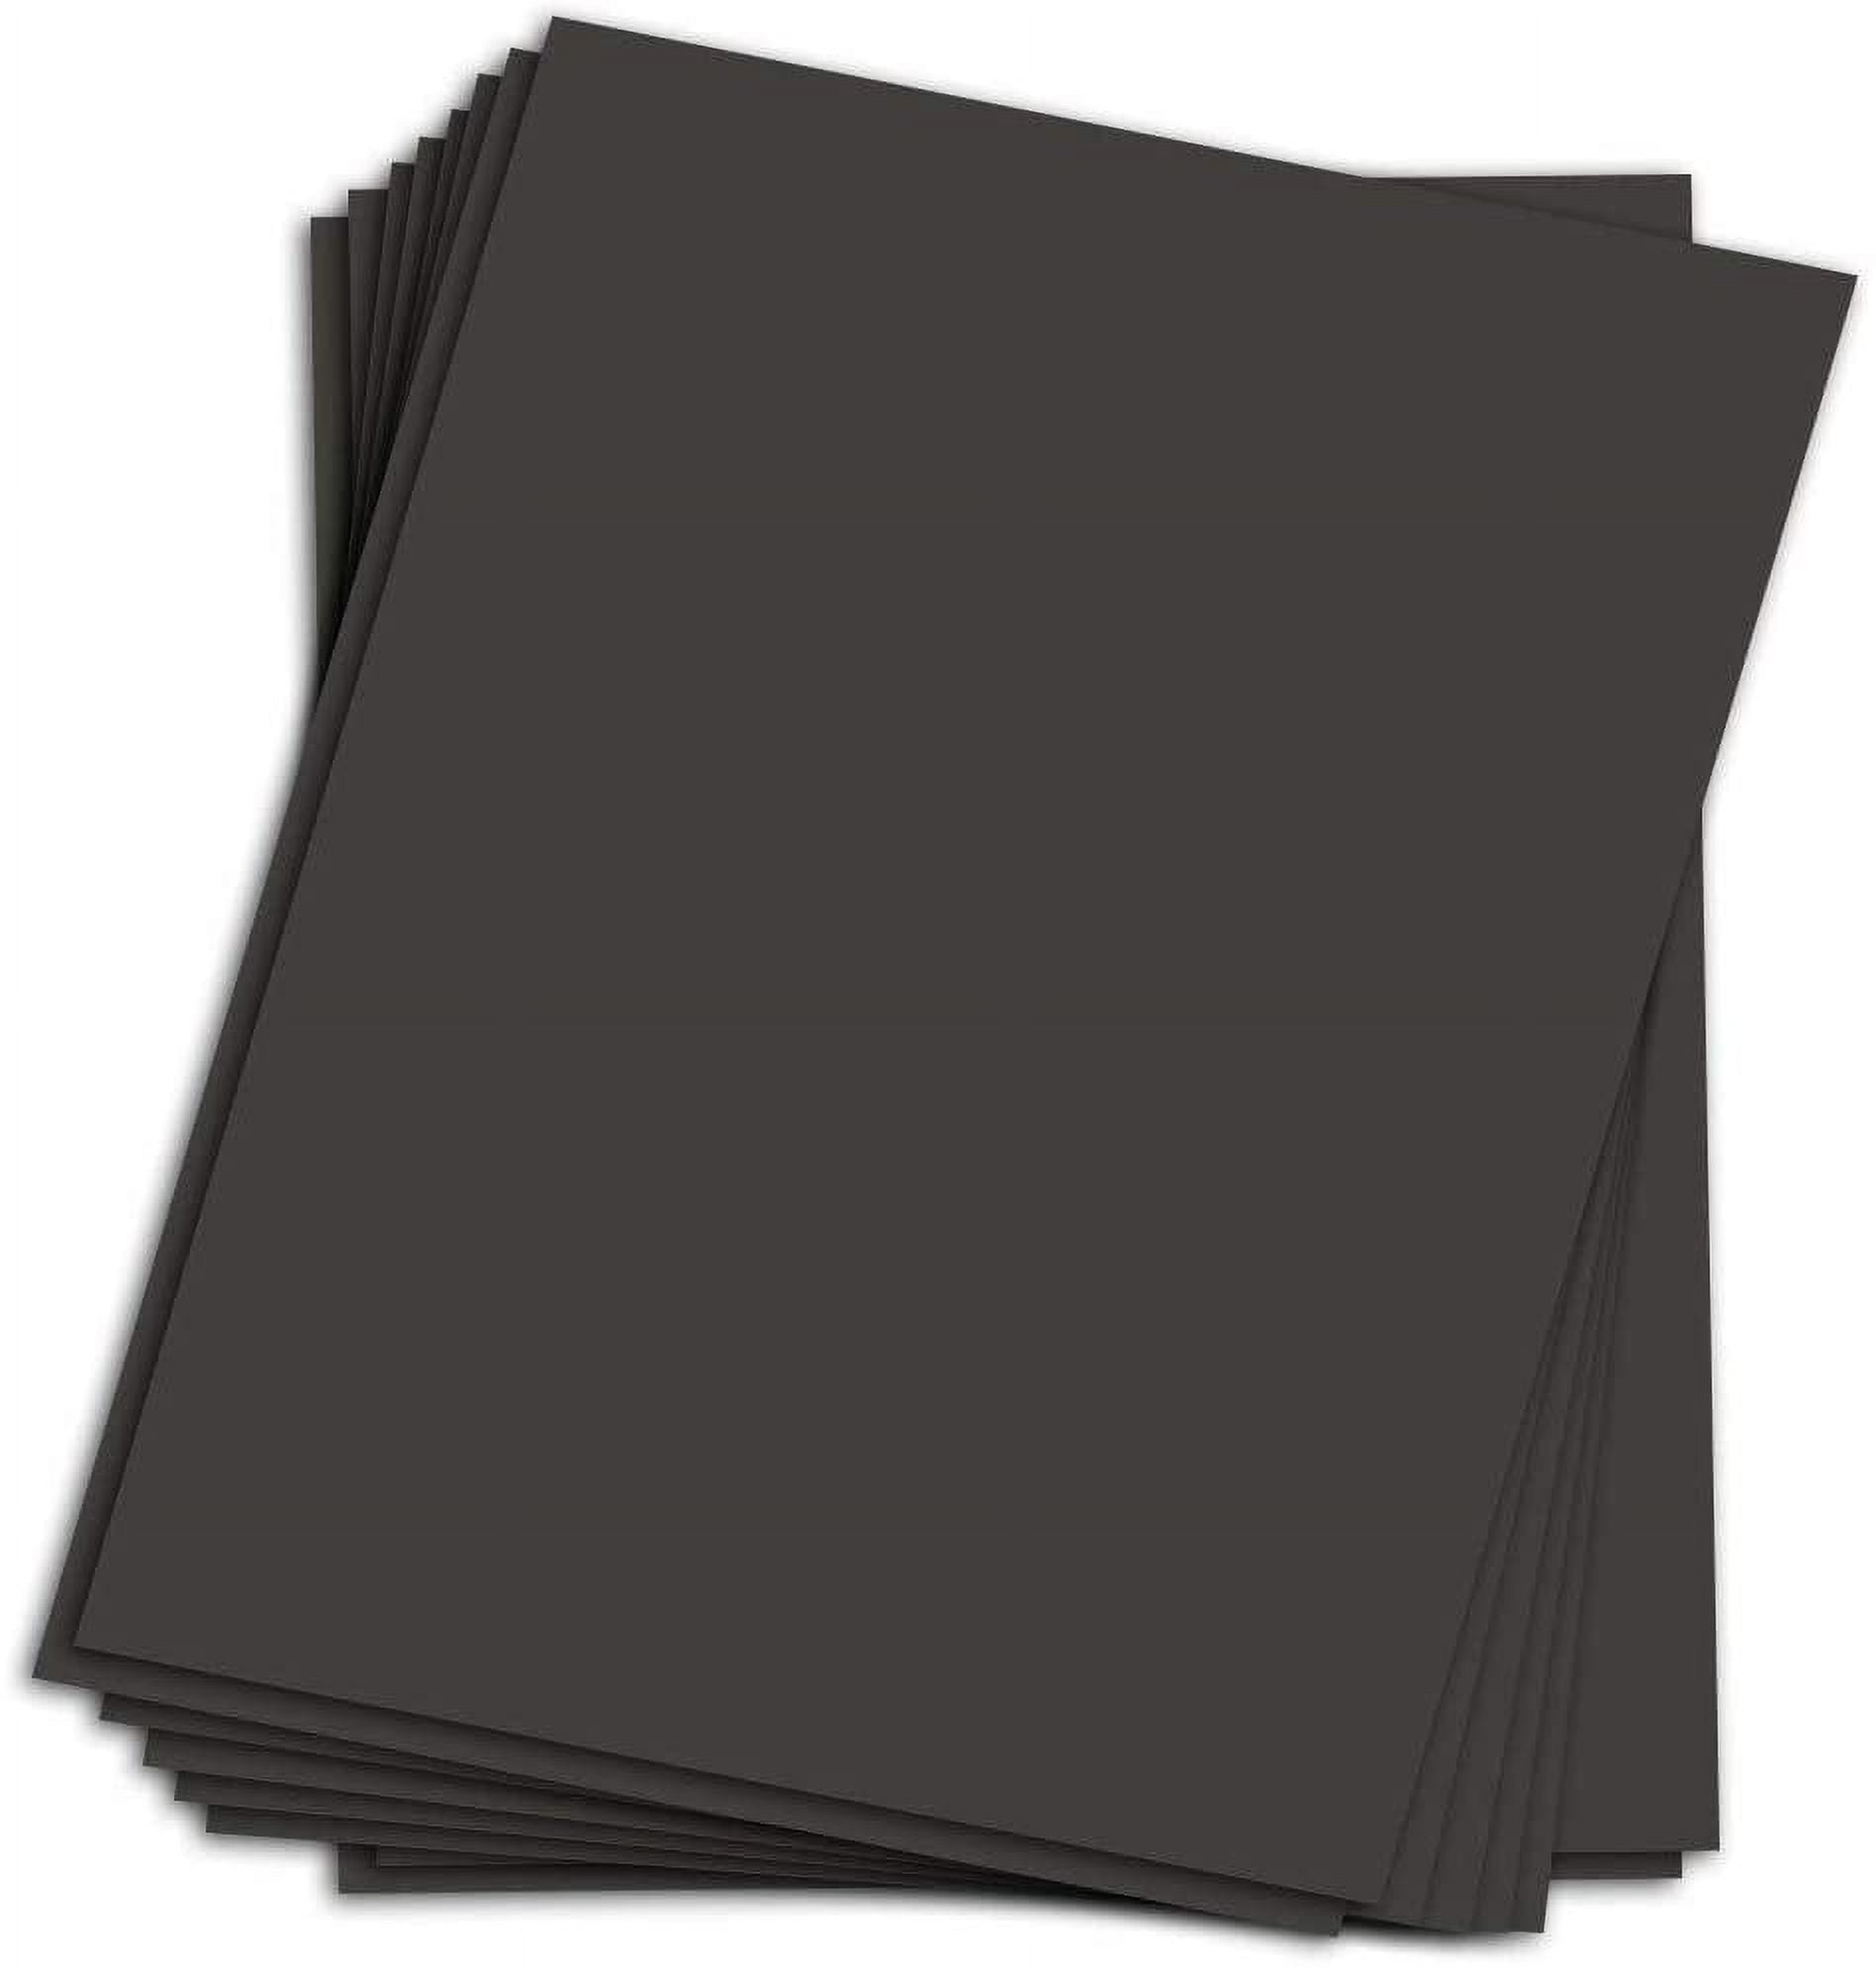 Black Chipboard - Cardboard Medium Weight Chipboard Sheets - 10 per Pack | 8.5 x 11 Inches